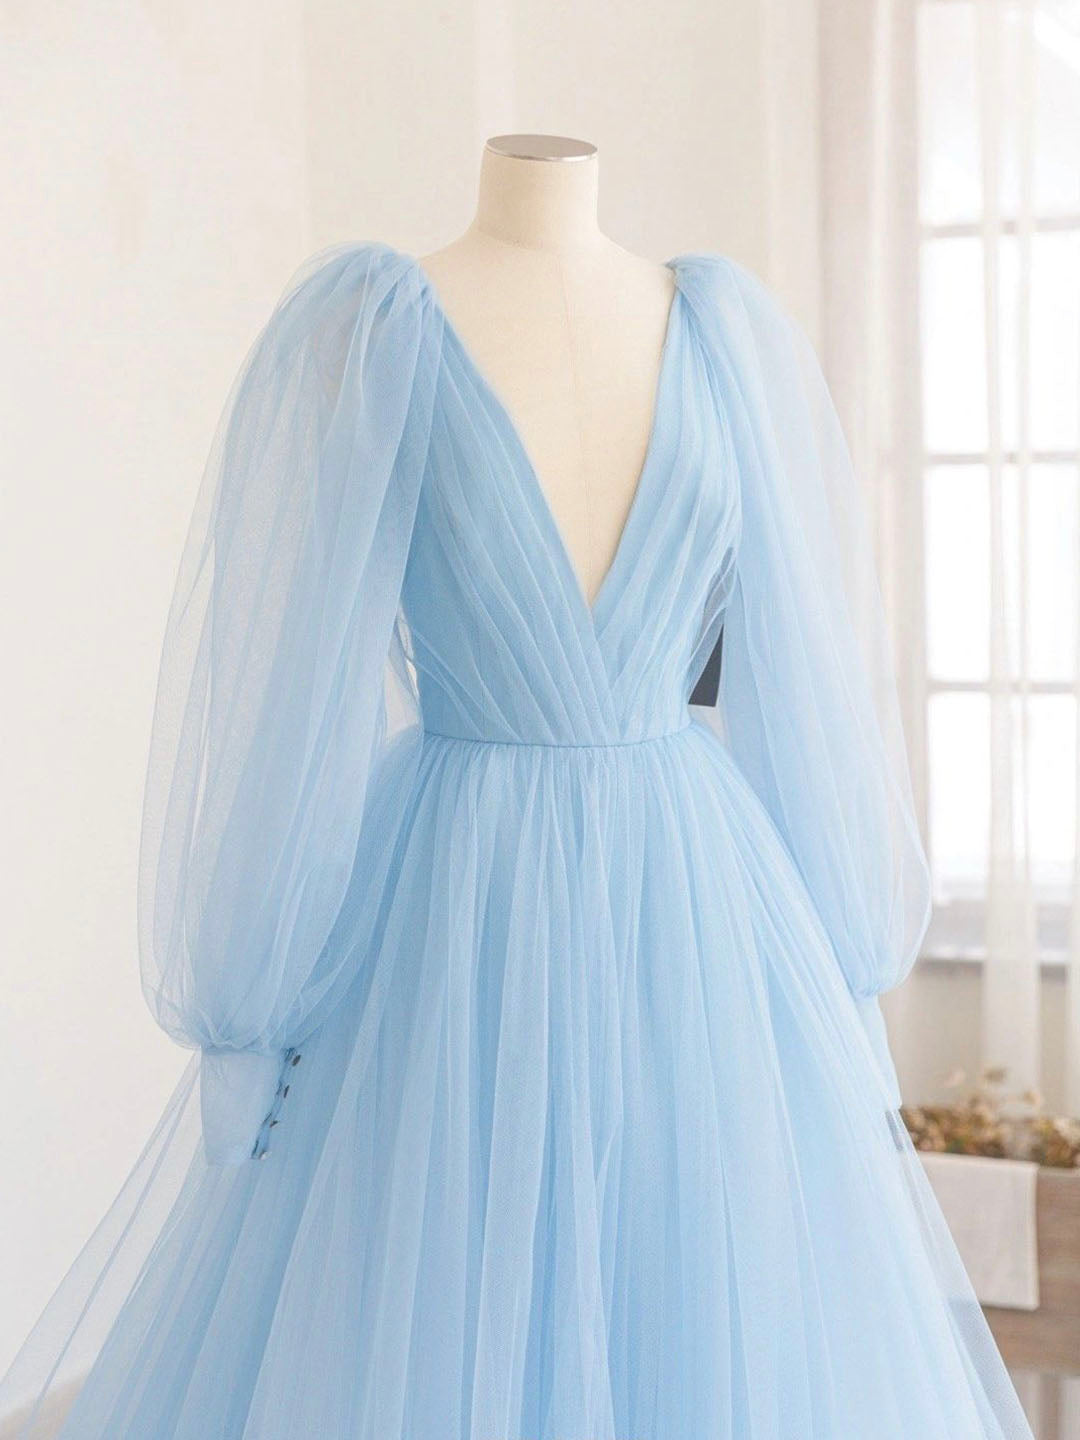 Blue V-Neck Tulle Long Prom Dress, A-Line Long Sleeve Evening Dress